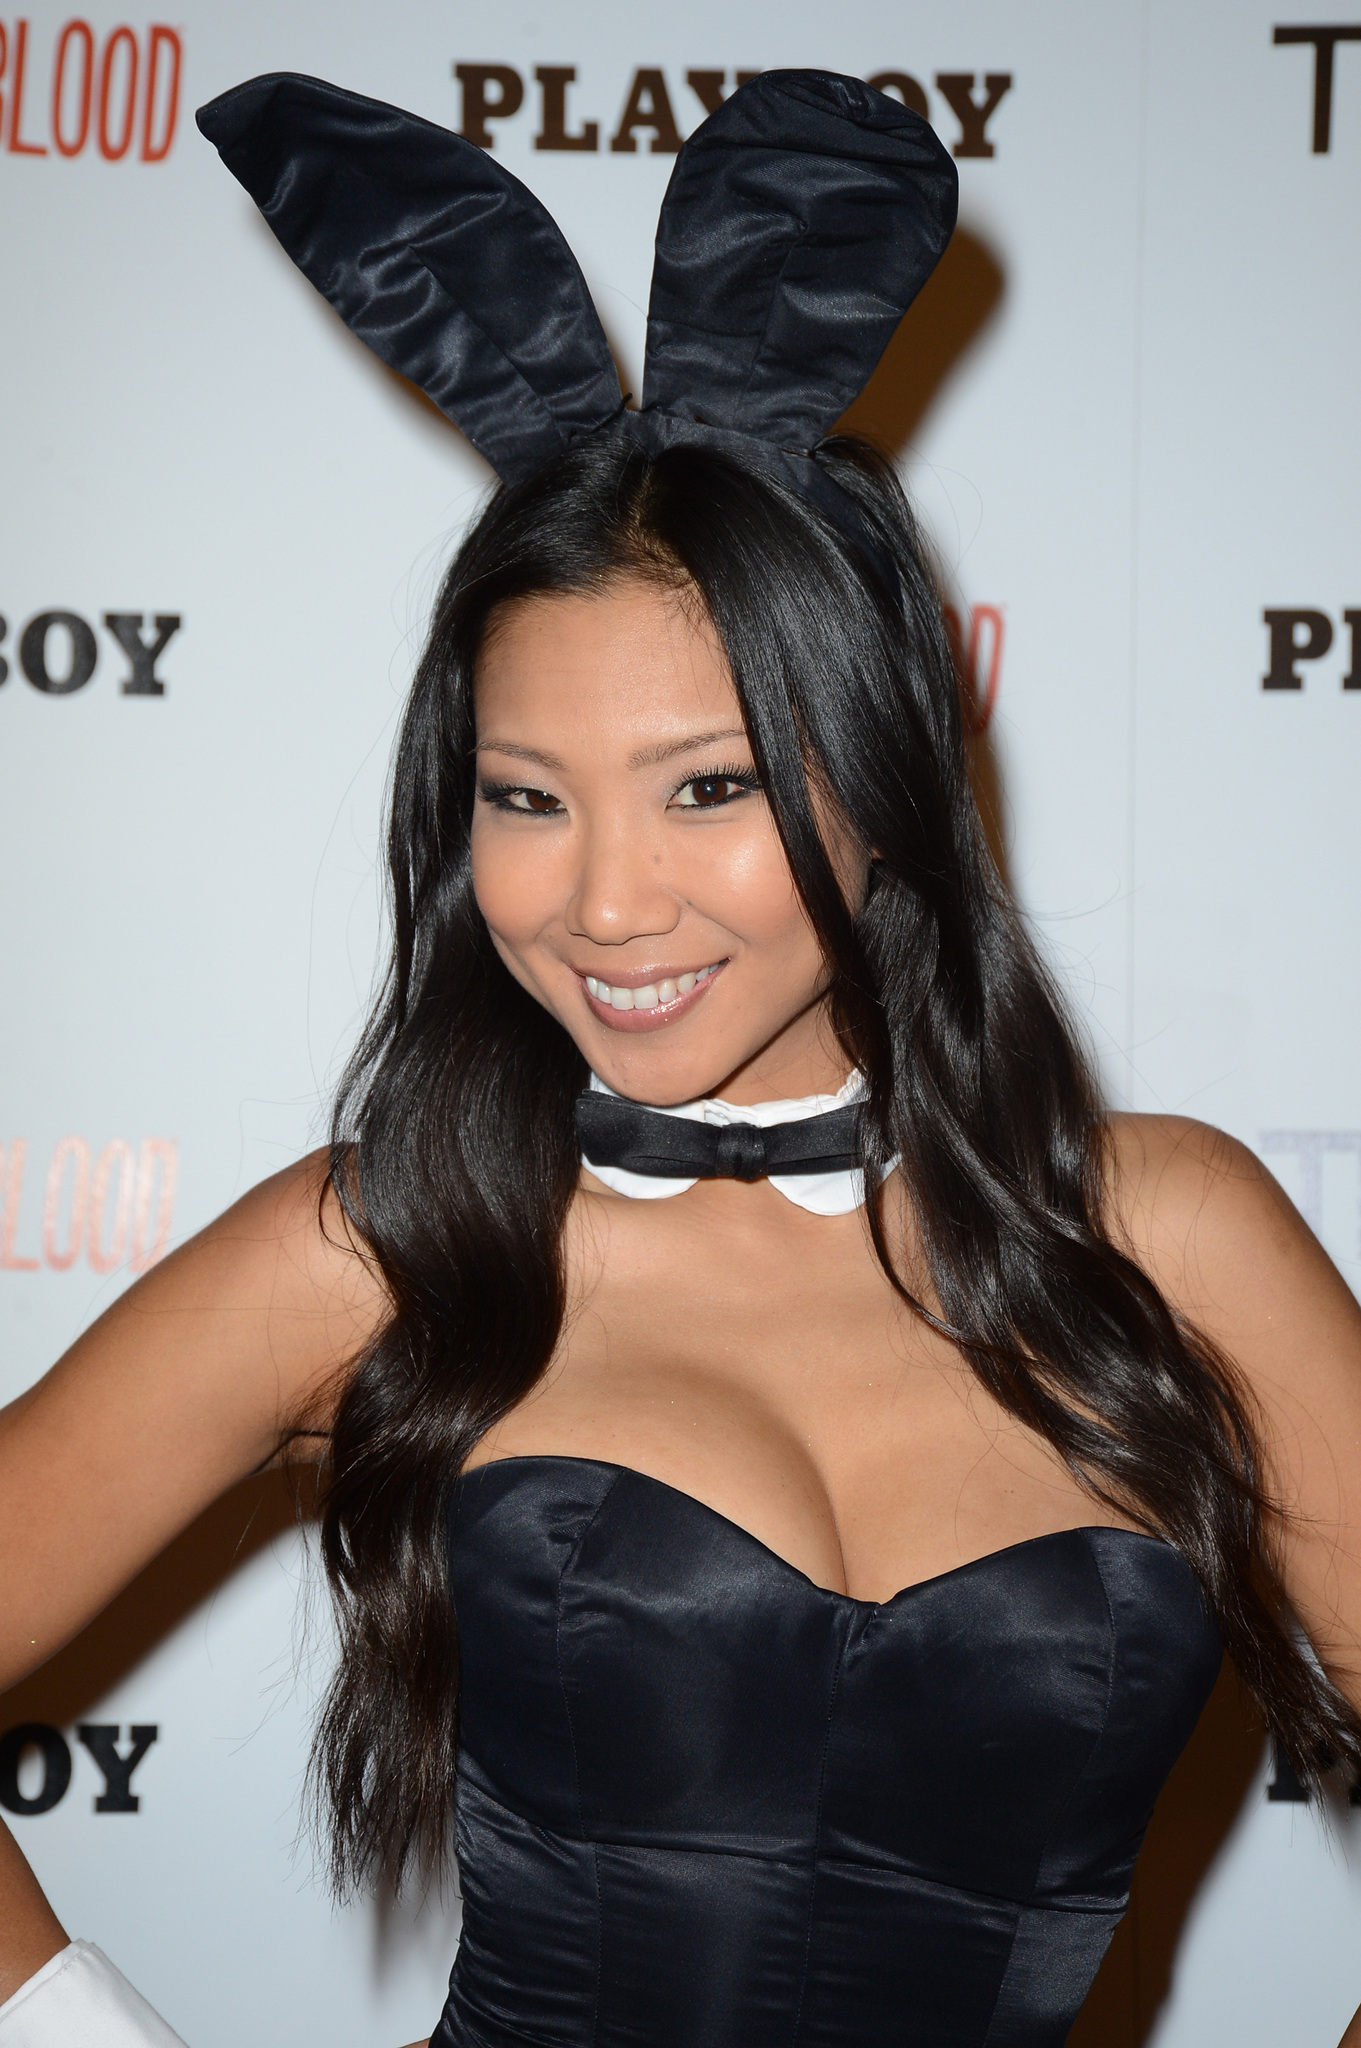 Playboy asian women in Nude Asian